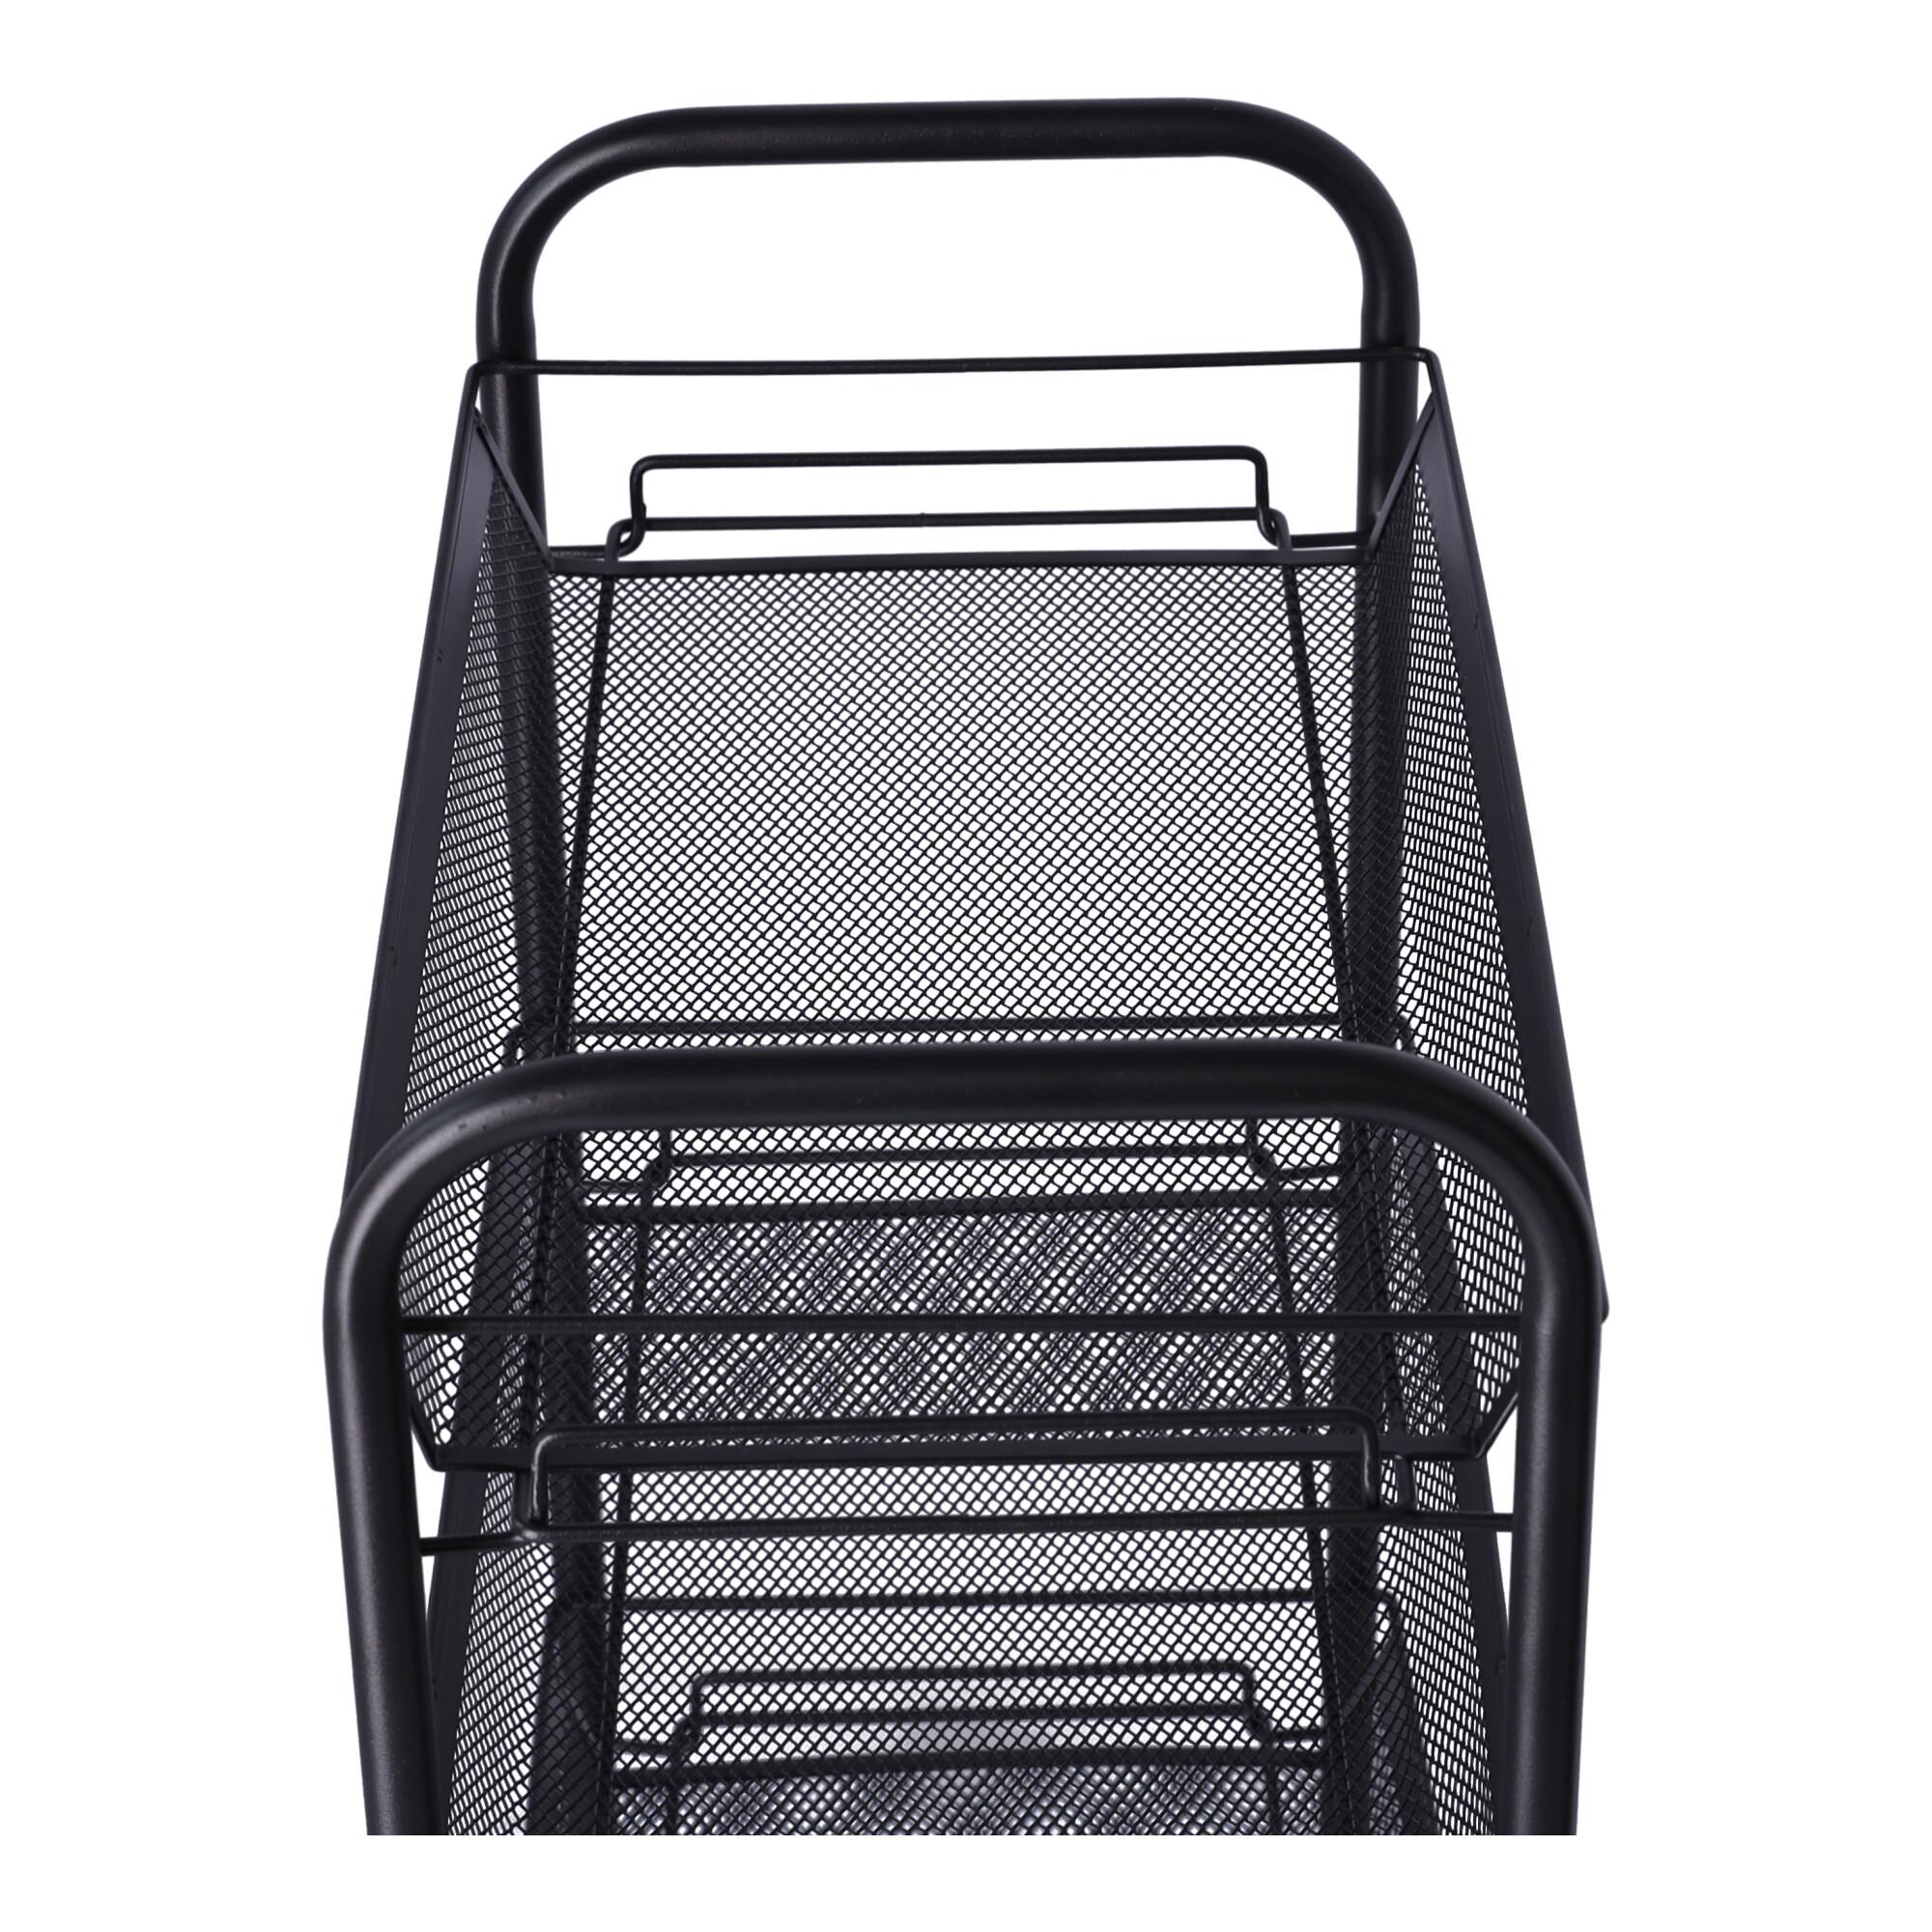 Bathroom cart, kitchen rack with four capacious shelves - black